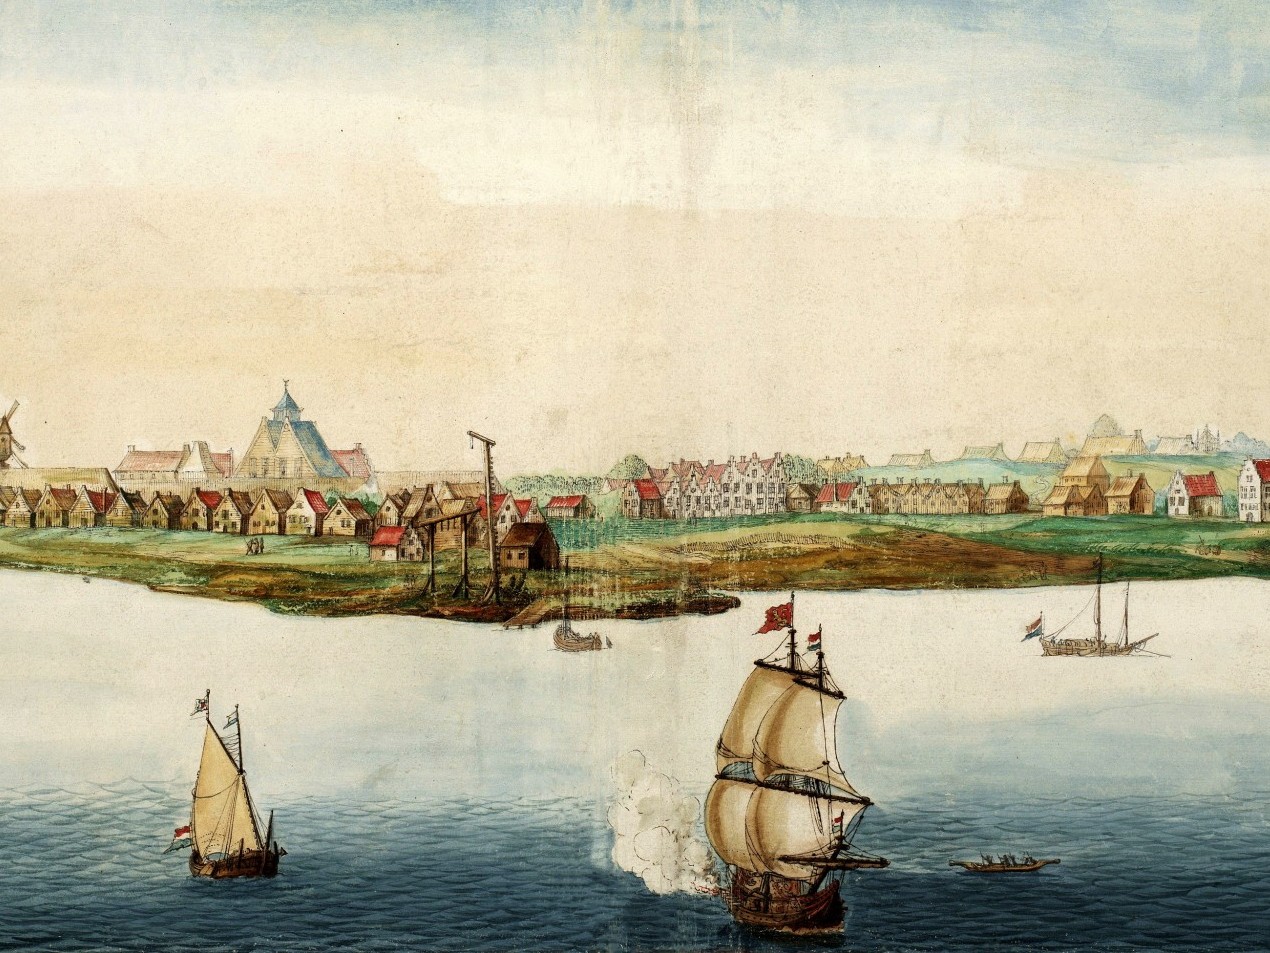 Nieuw Amsterdam, 1664. Source: Johannes Vingboons [Public domain], via Wikimedia Commons